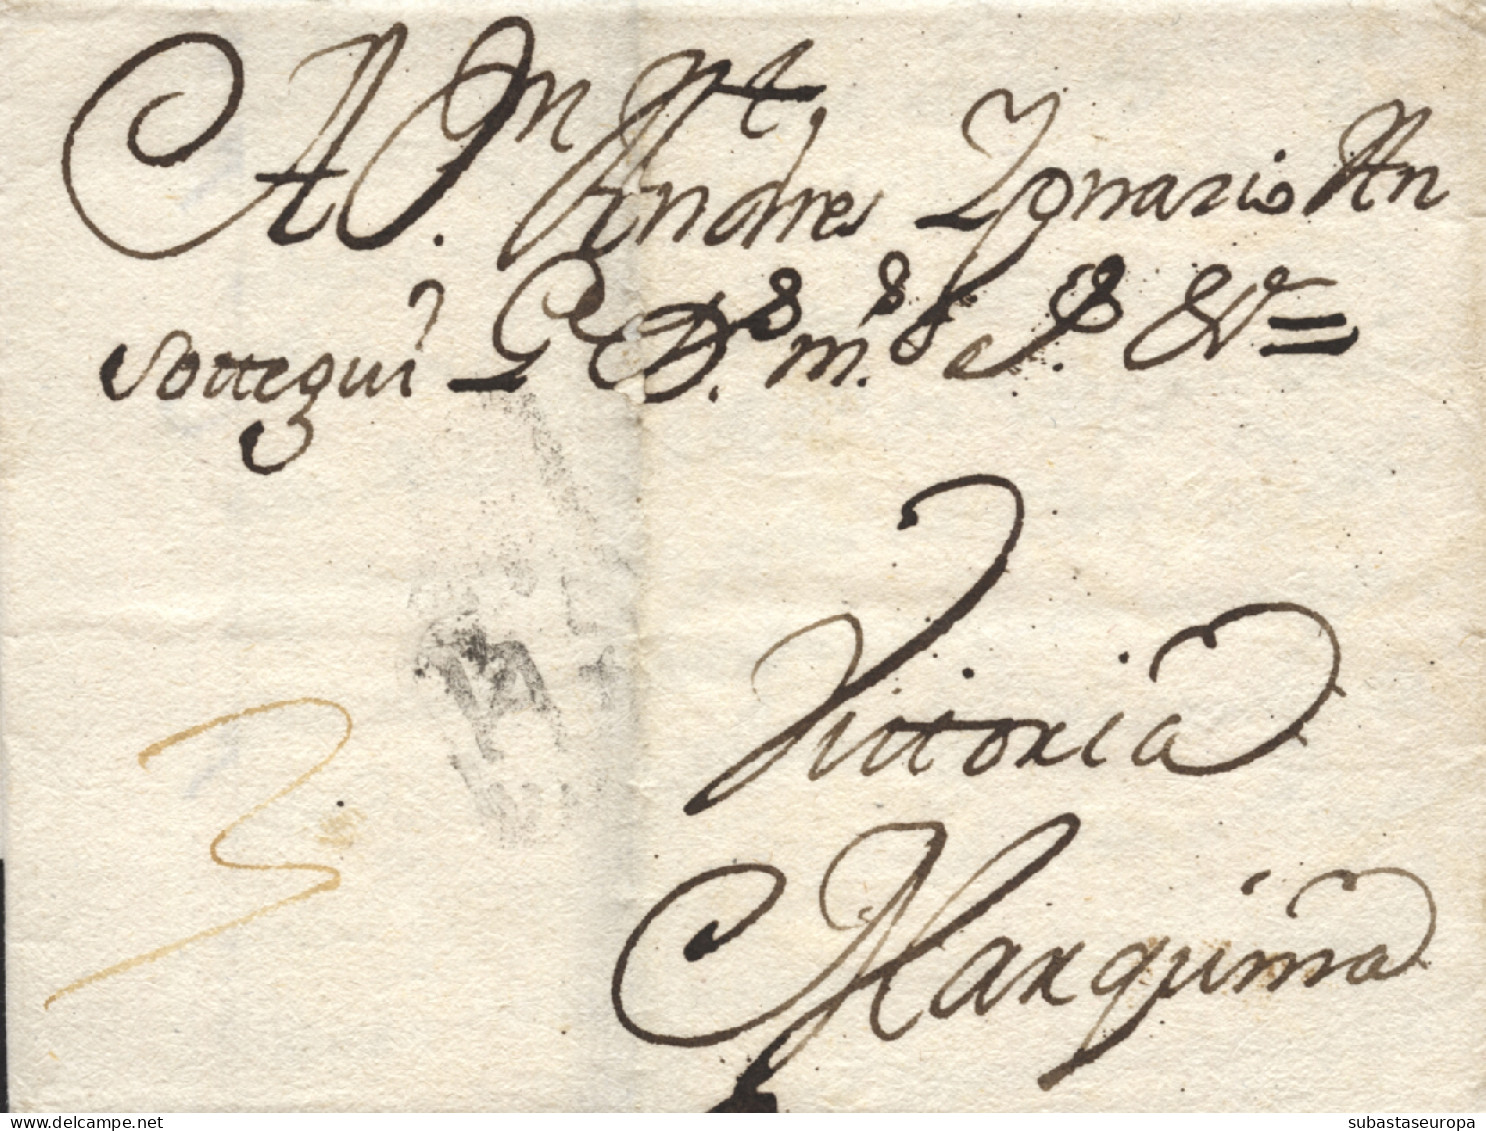 D.P. 14. 1742 (28 SEP). Carta De Valladolid A Marquina (Vitoria). Marca Nº 4N Muy Débil. Rarísima. - ...-1850 Prefilatelia